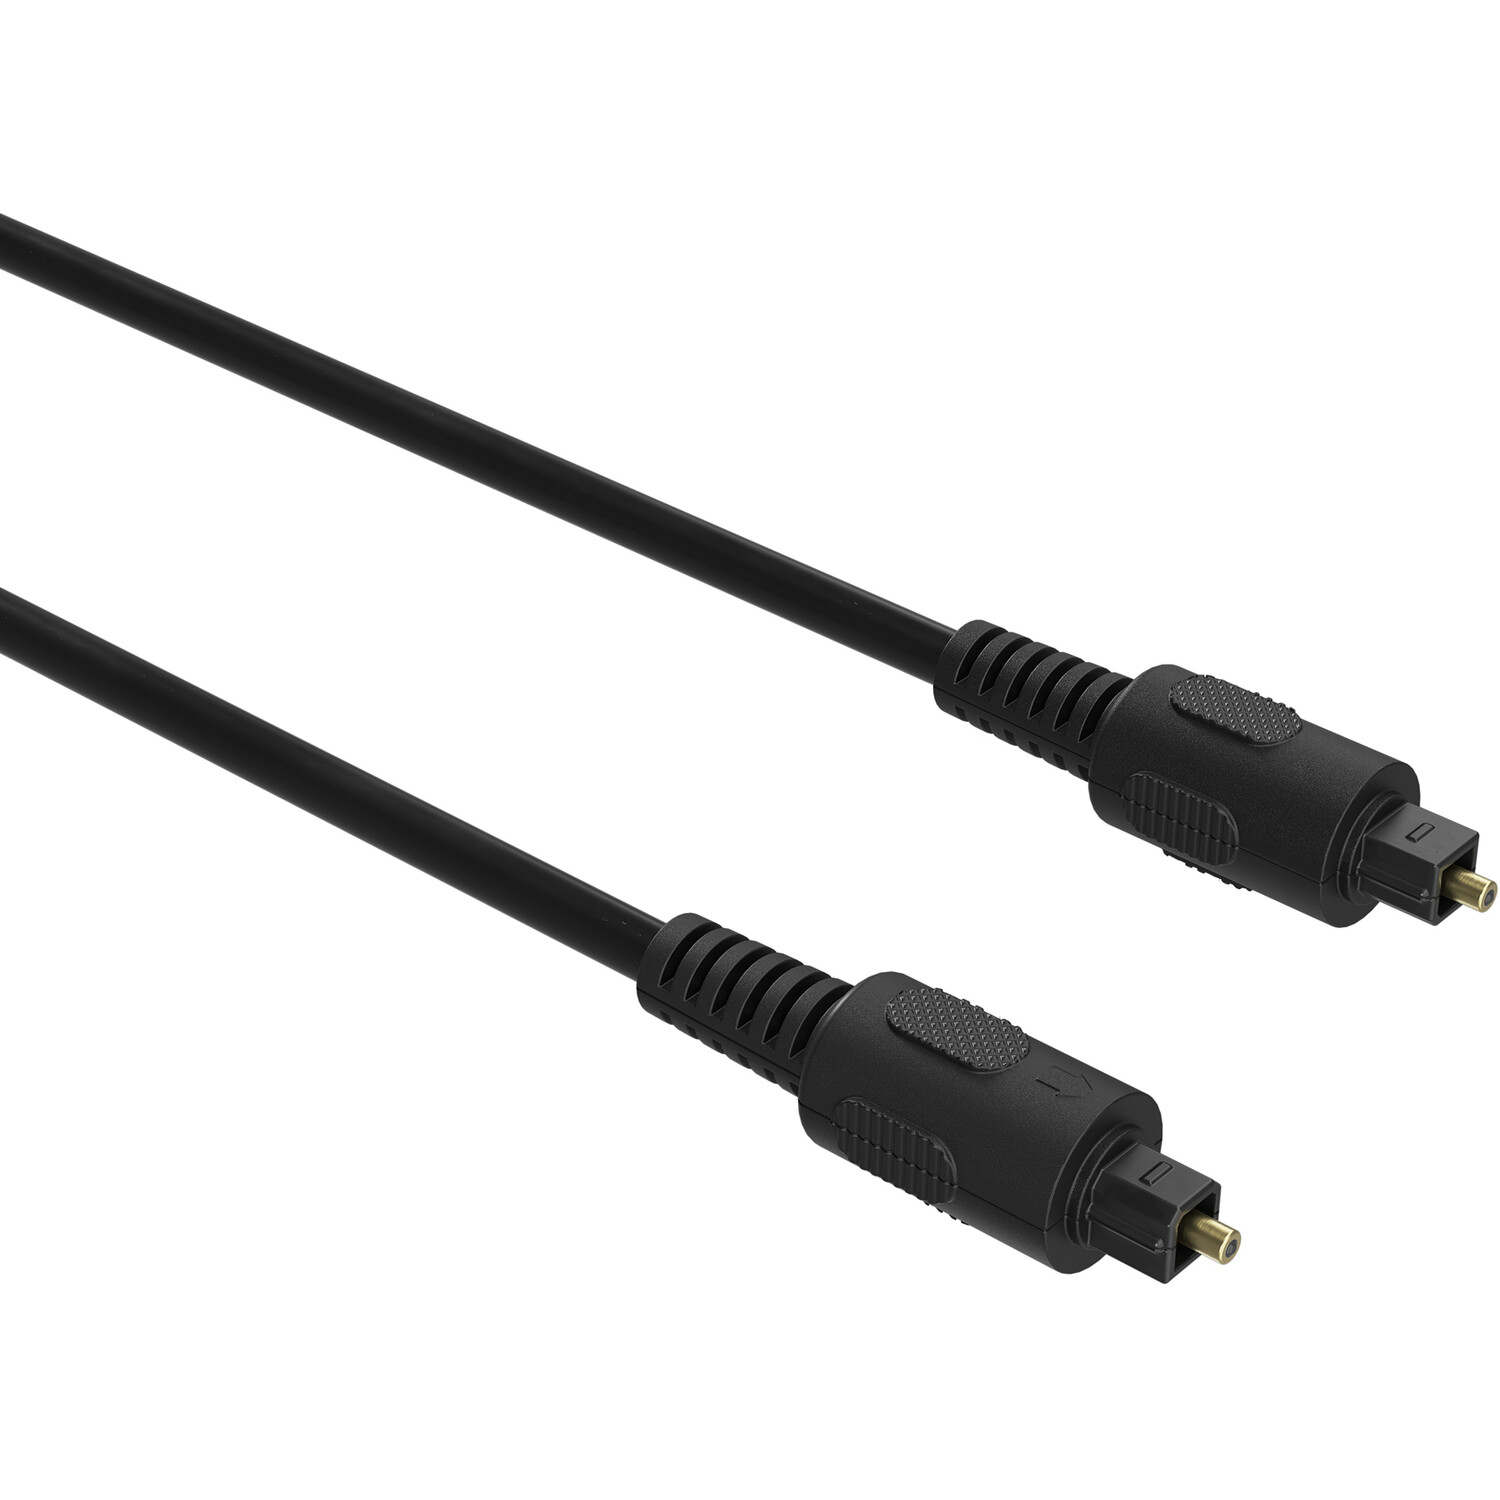 Digital Optical Cable - Black Image 2